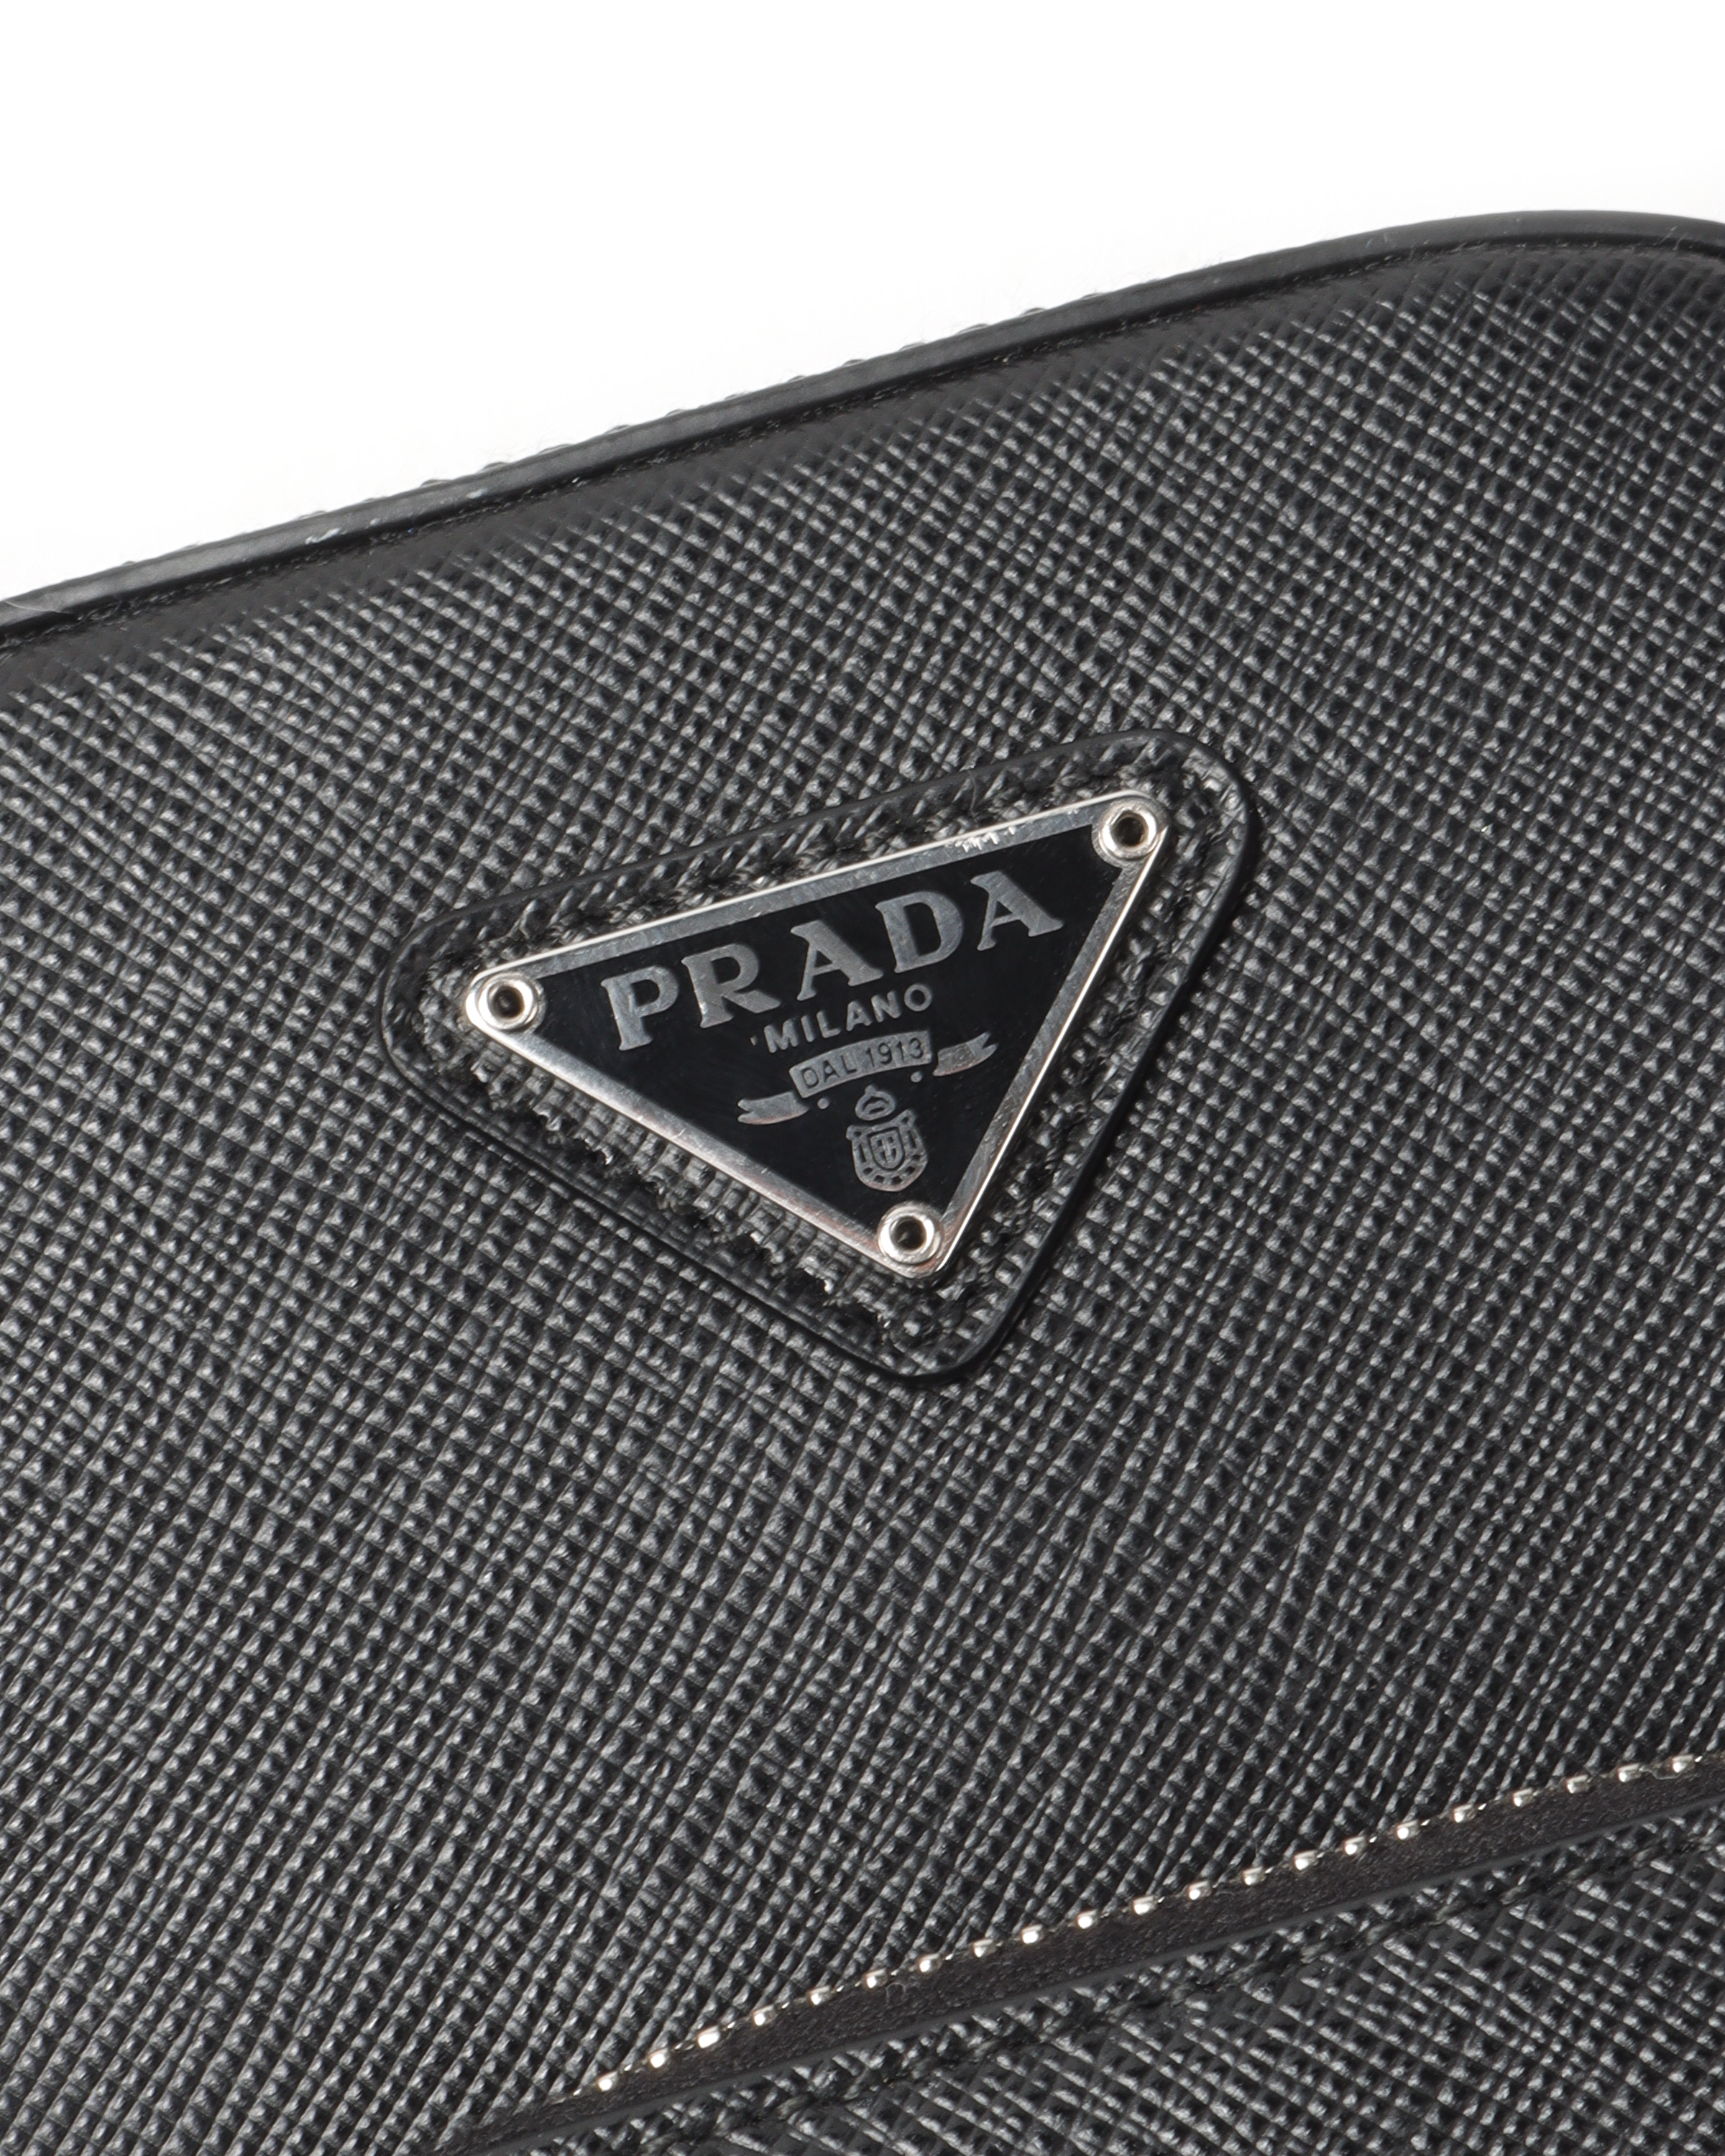 Jele Mix - Sneaker - Prada shoulder strap phone case พร้อมส่ง ราคา